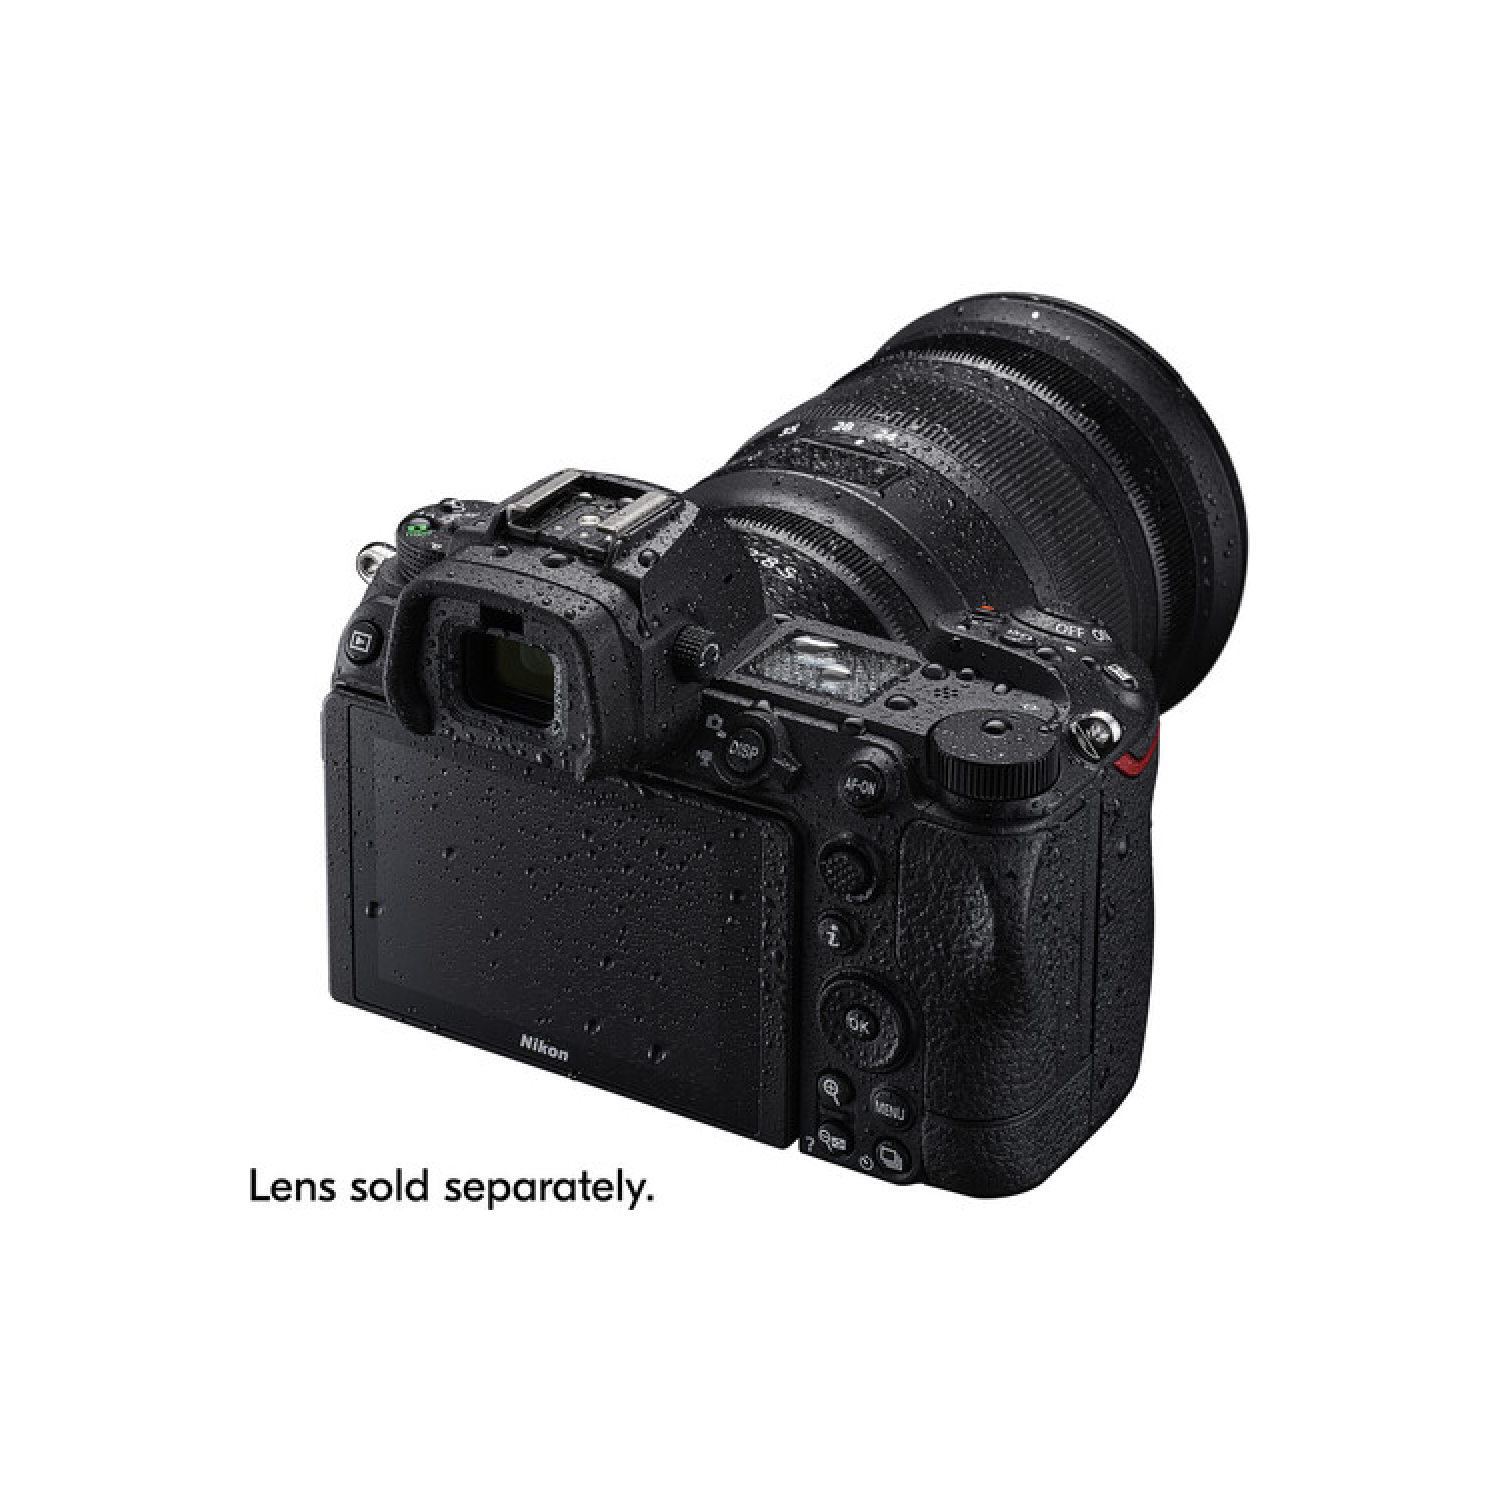 Nikon Z6II Mirrorless Digital Camera - Body only